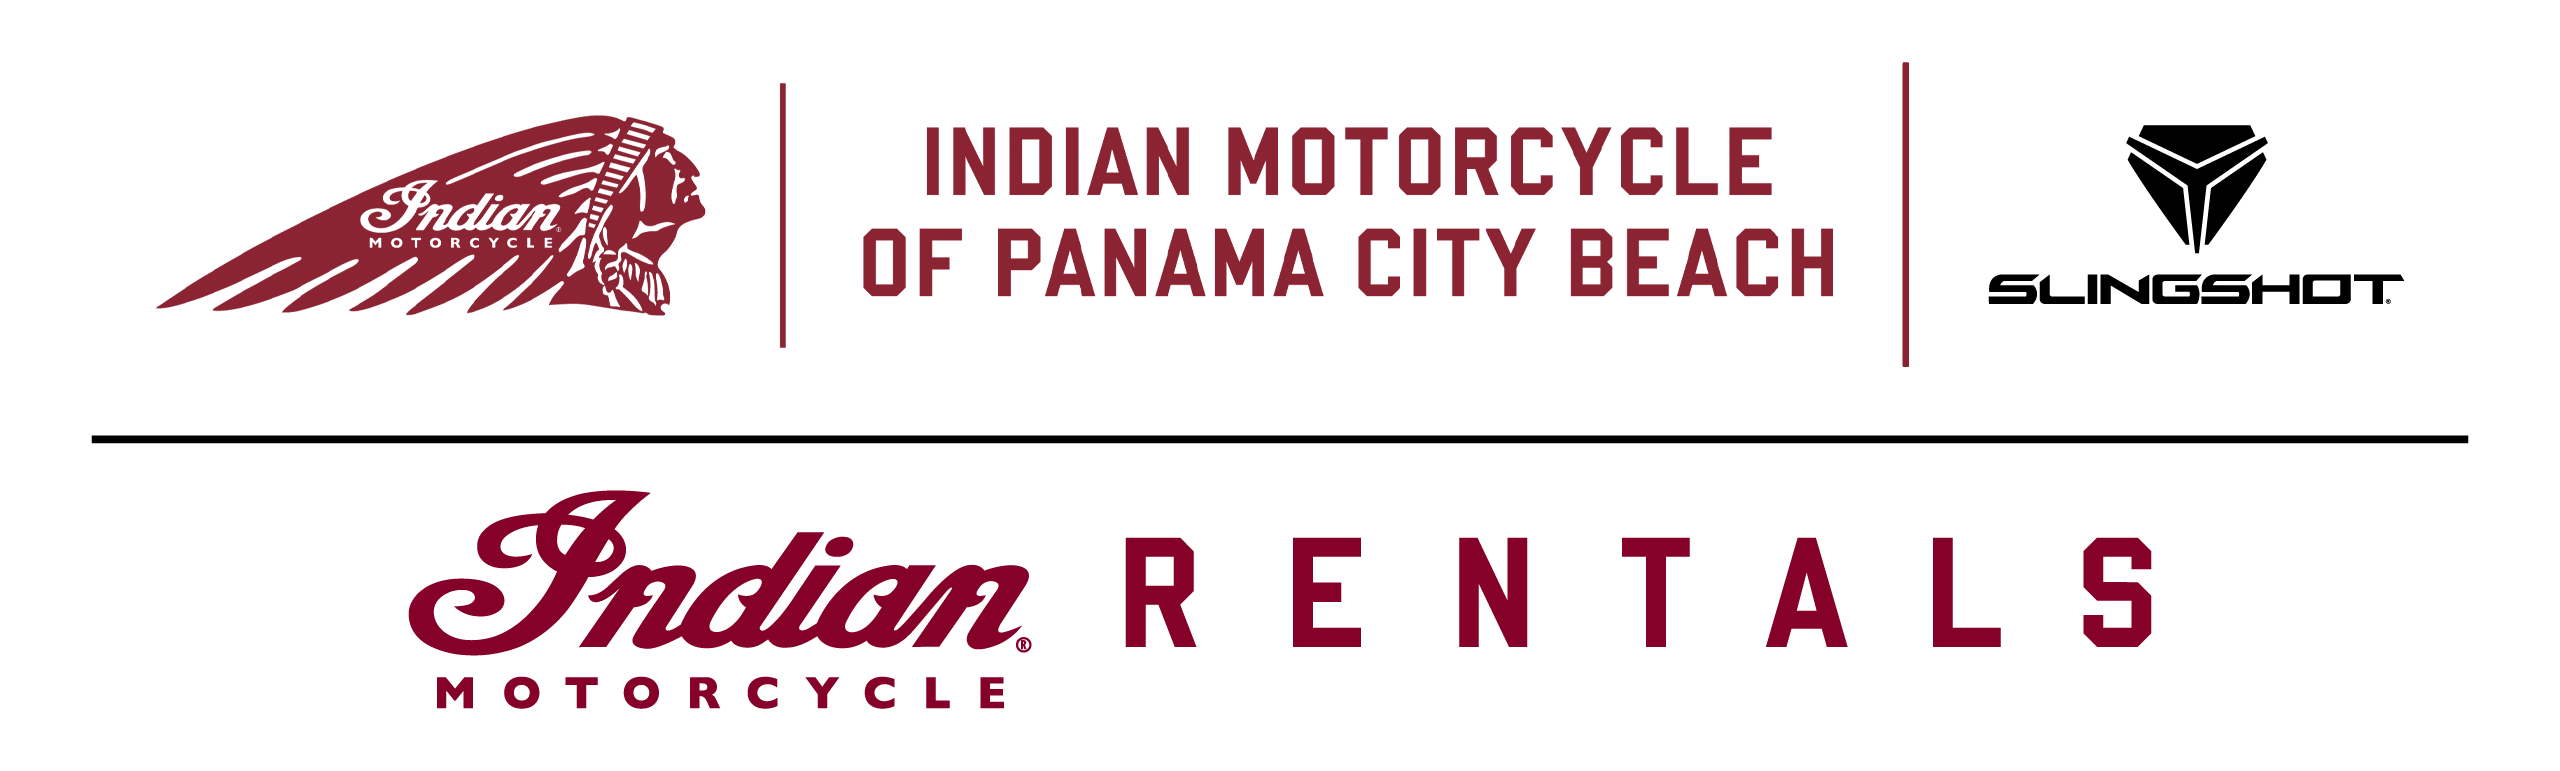 Indian Motorcycle of Panama City Beach